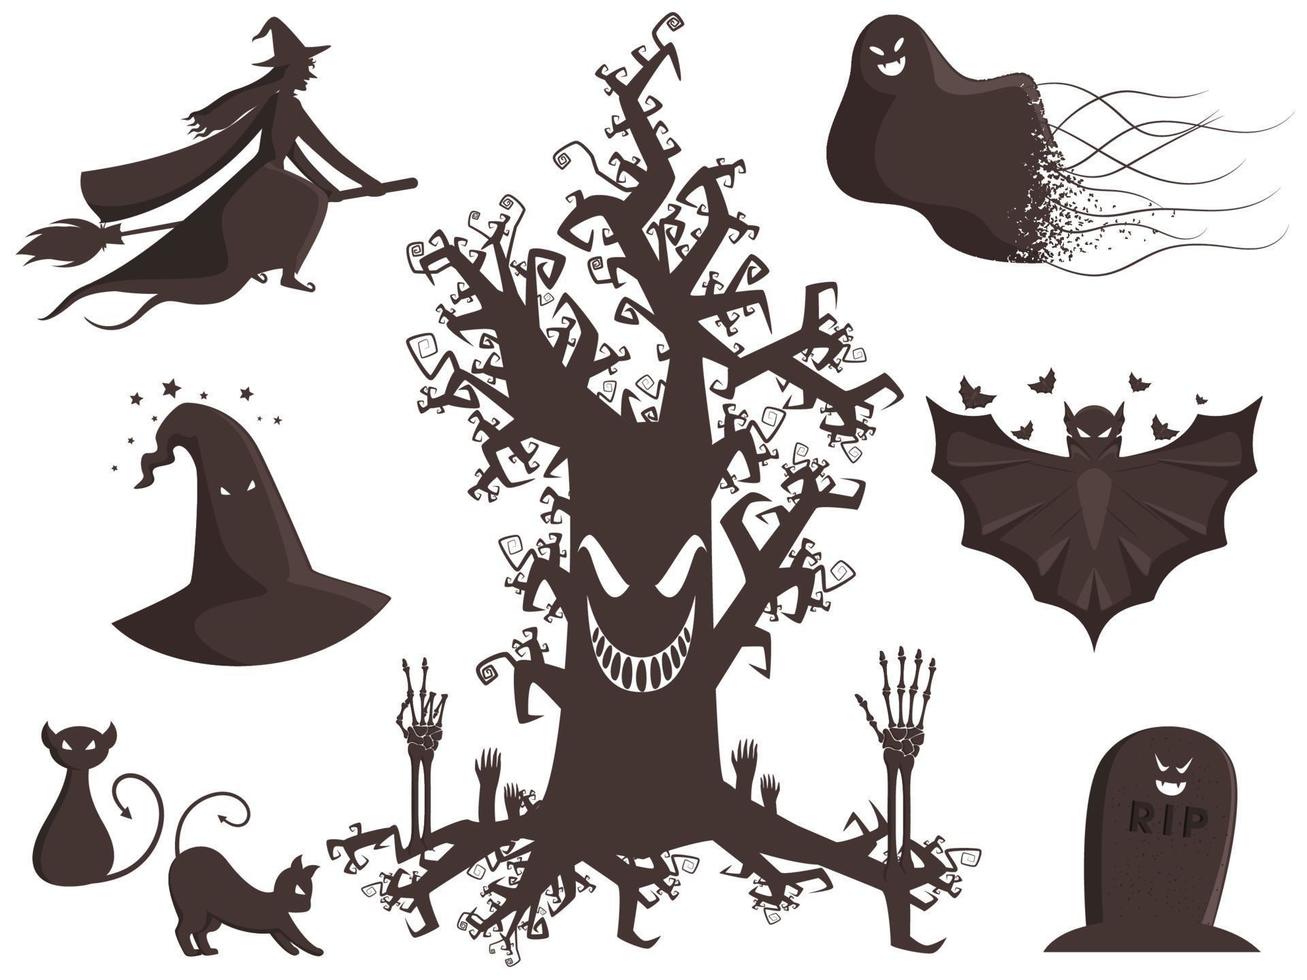 ilustración de escalofriante árbol con bruja volador escoba, fantasma, murciélagos, dibujos animados gatos, esqueleto manos y q.e.p.d lápida sepulcral en blanco antecedentes. vector